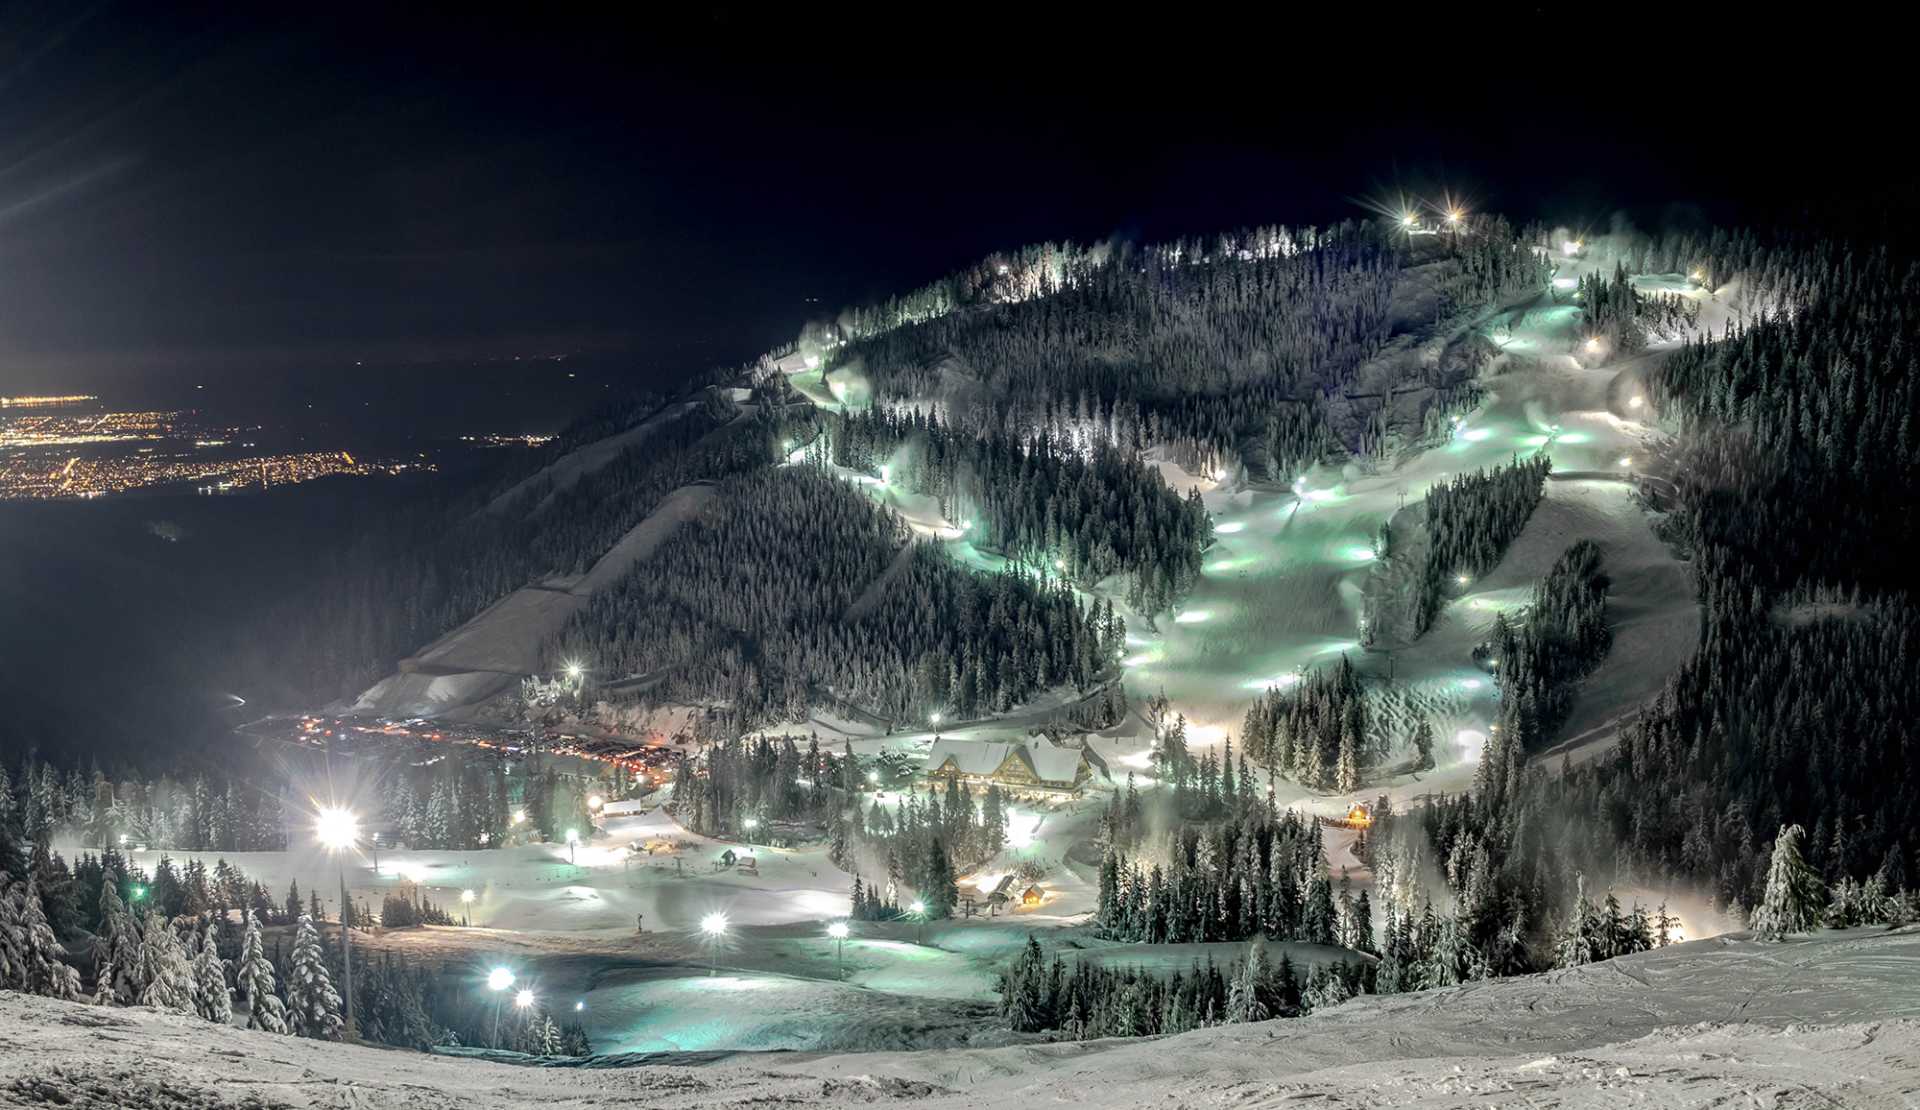 Night skiiing